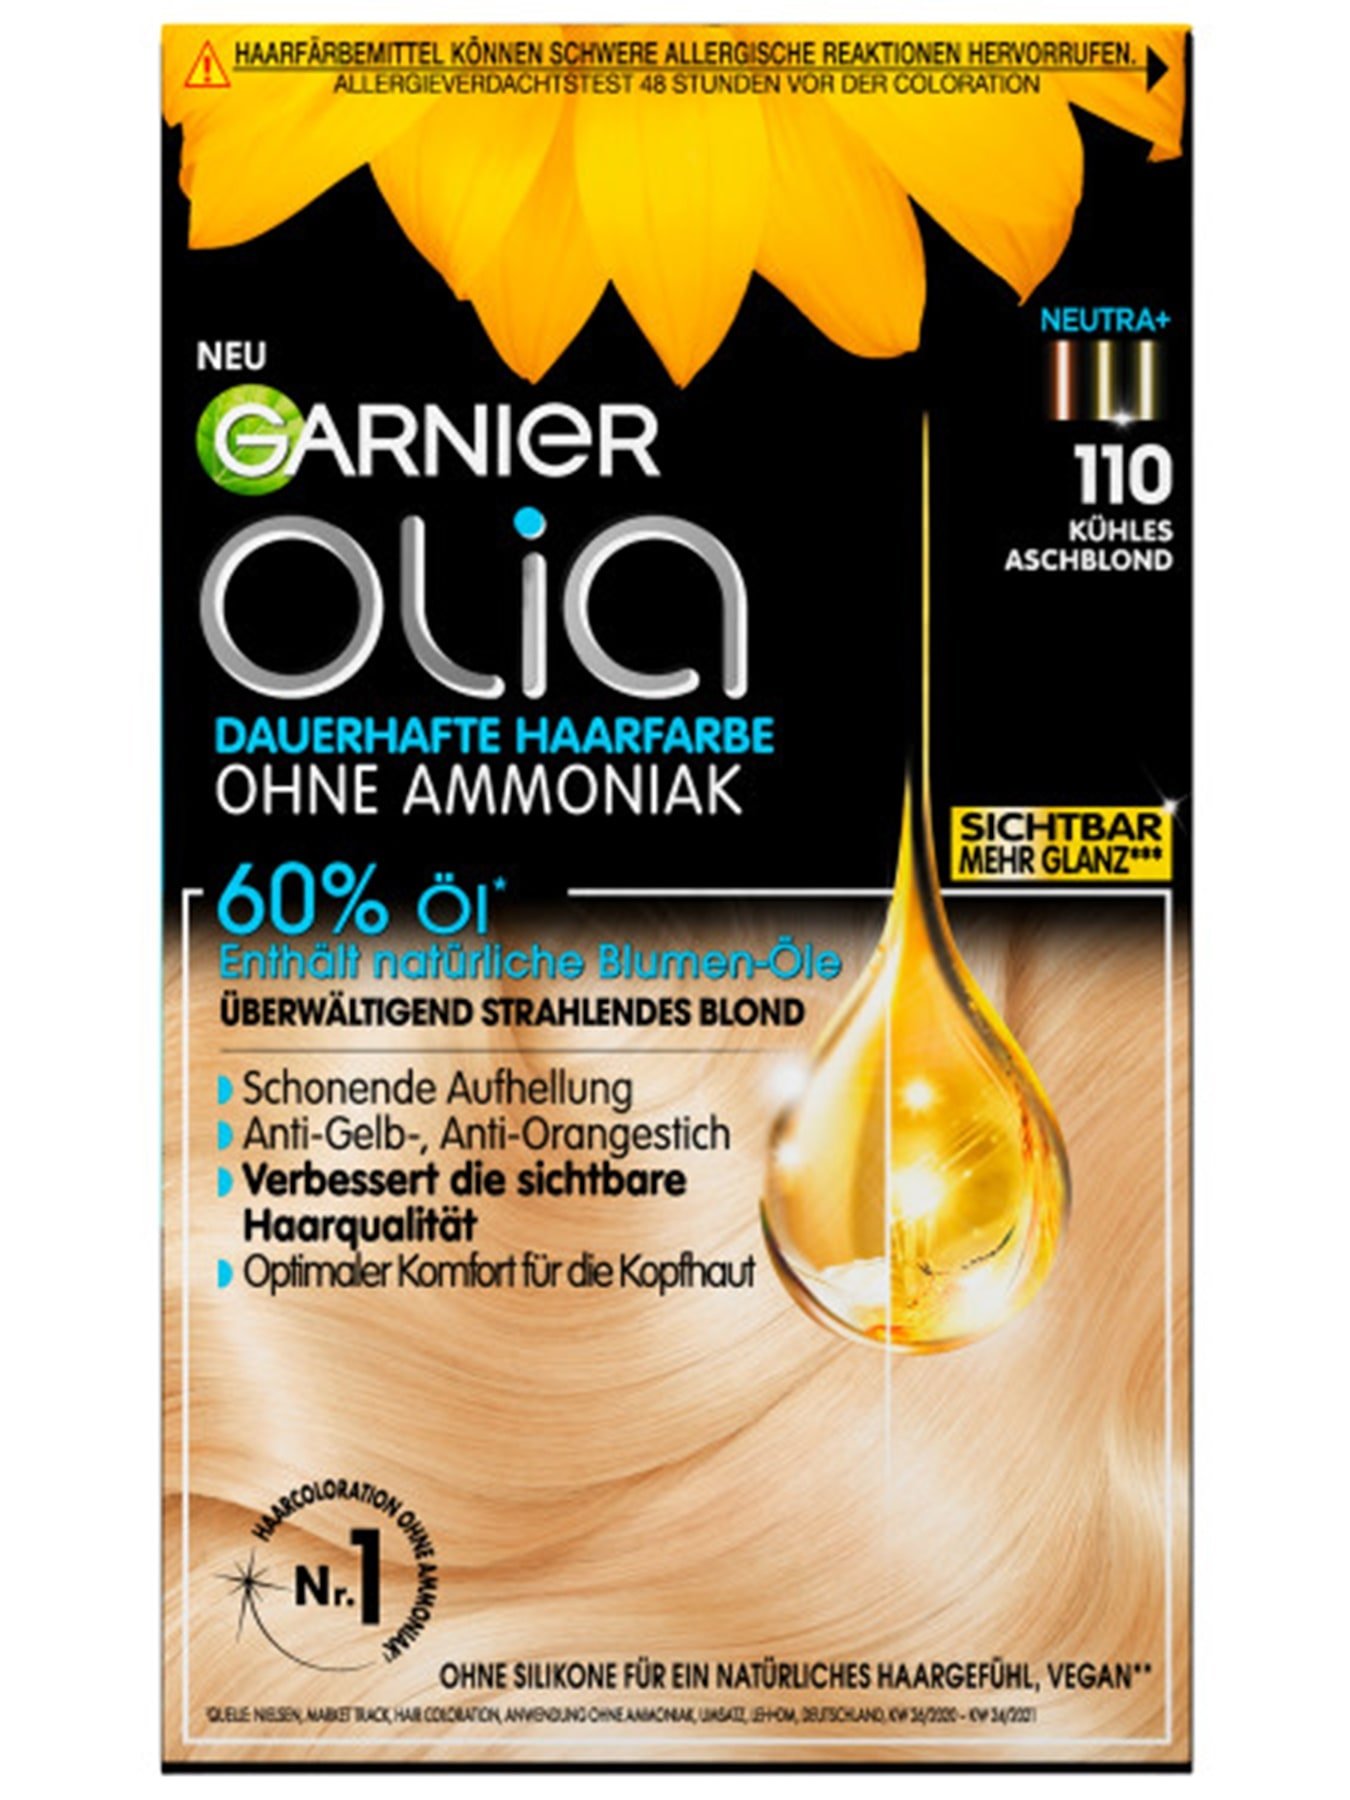 Garnier Olia 110 Kühles Aschblond - Produktabbildung